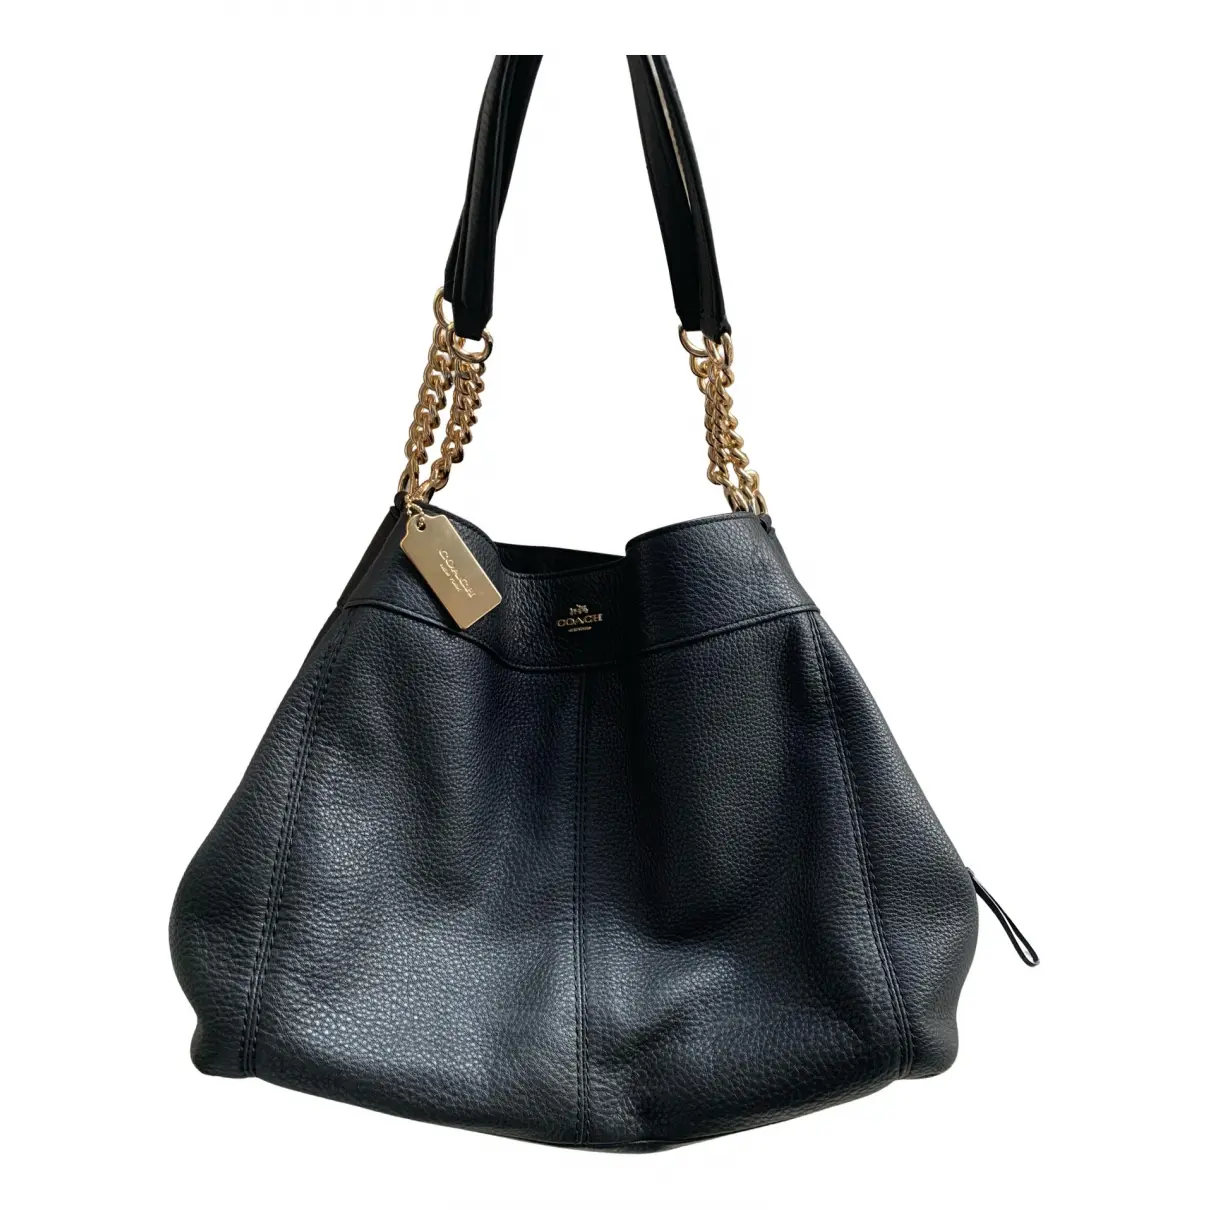 Edie leather handbag Coach